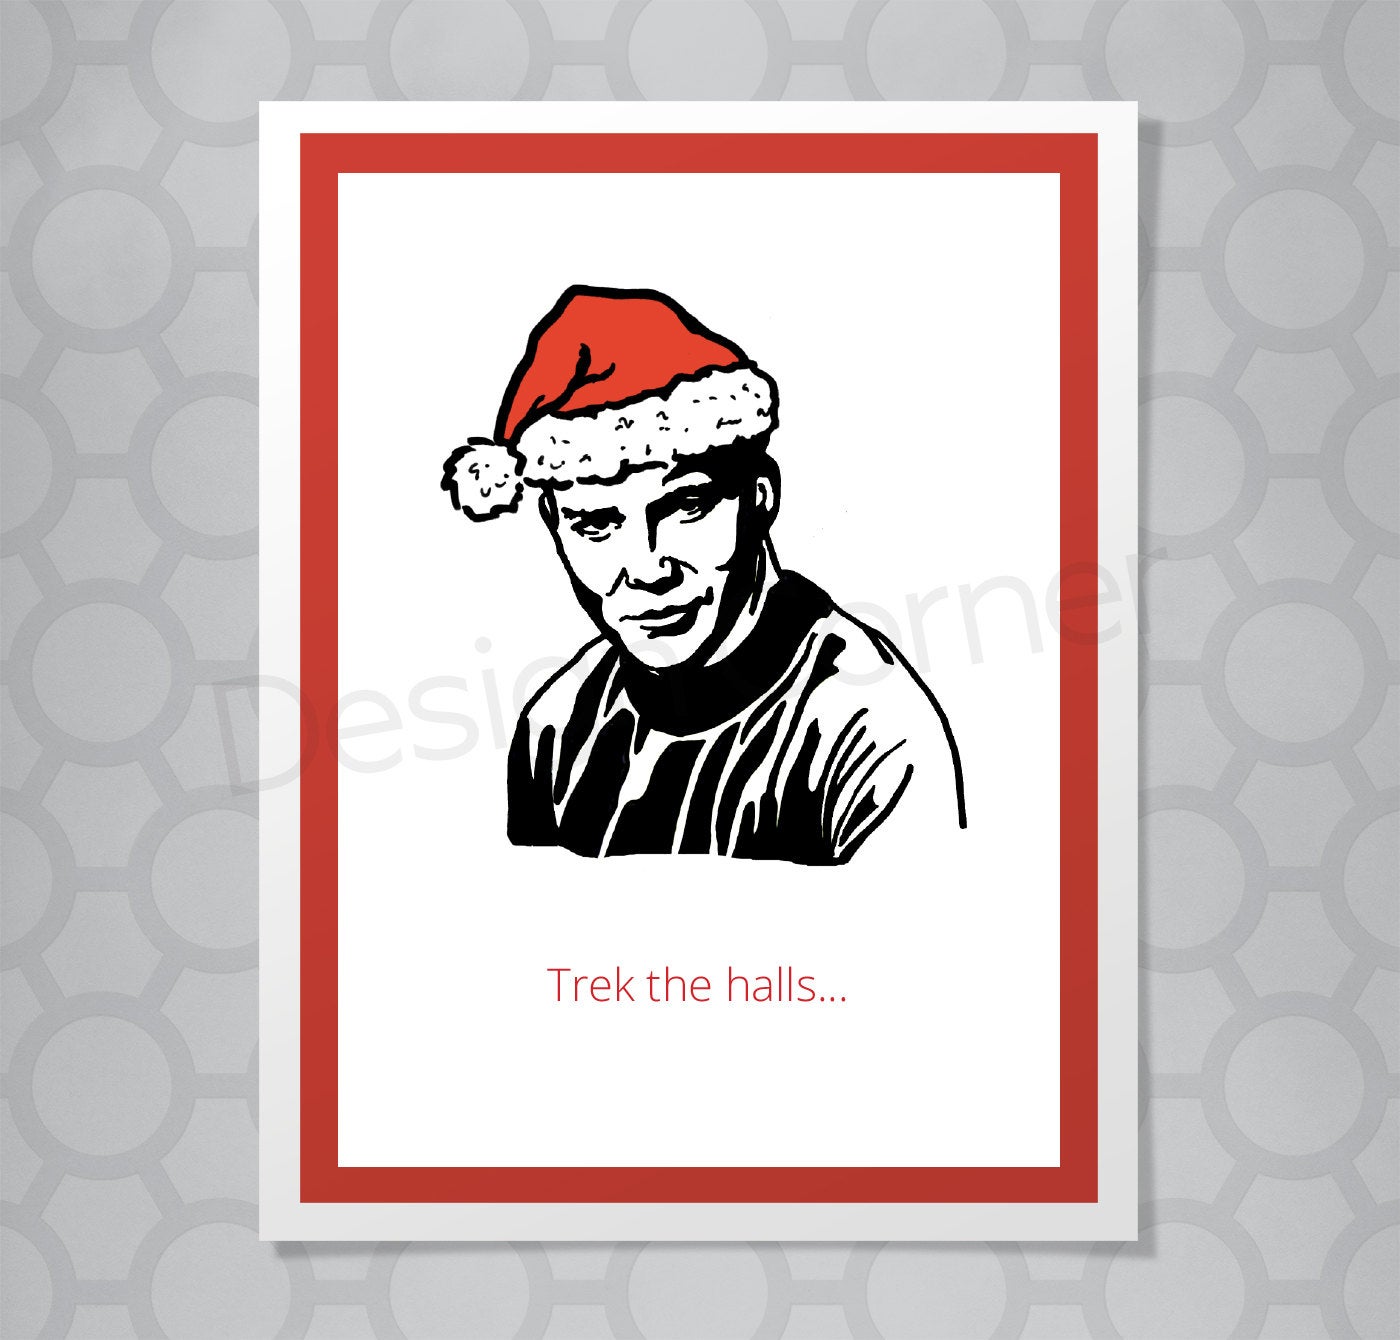 Christmas card with illustration of Star Trek's captain Kirk with a santa hat. Caption: Trek the halls...